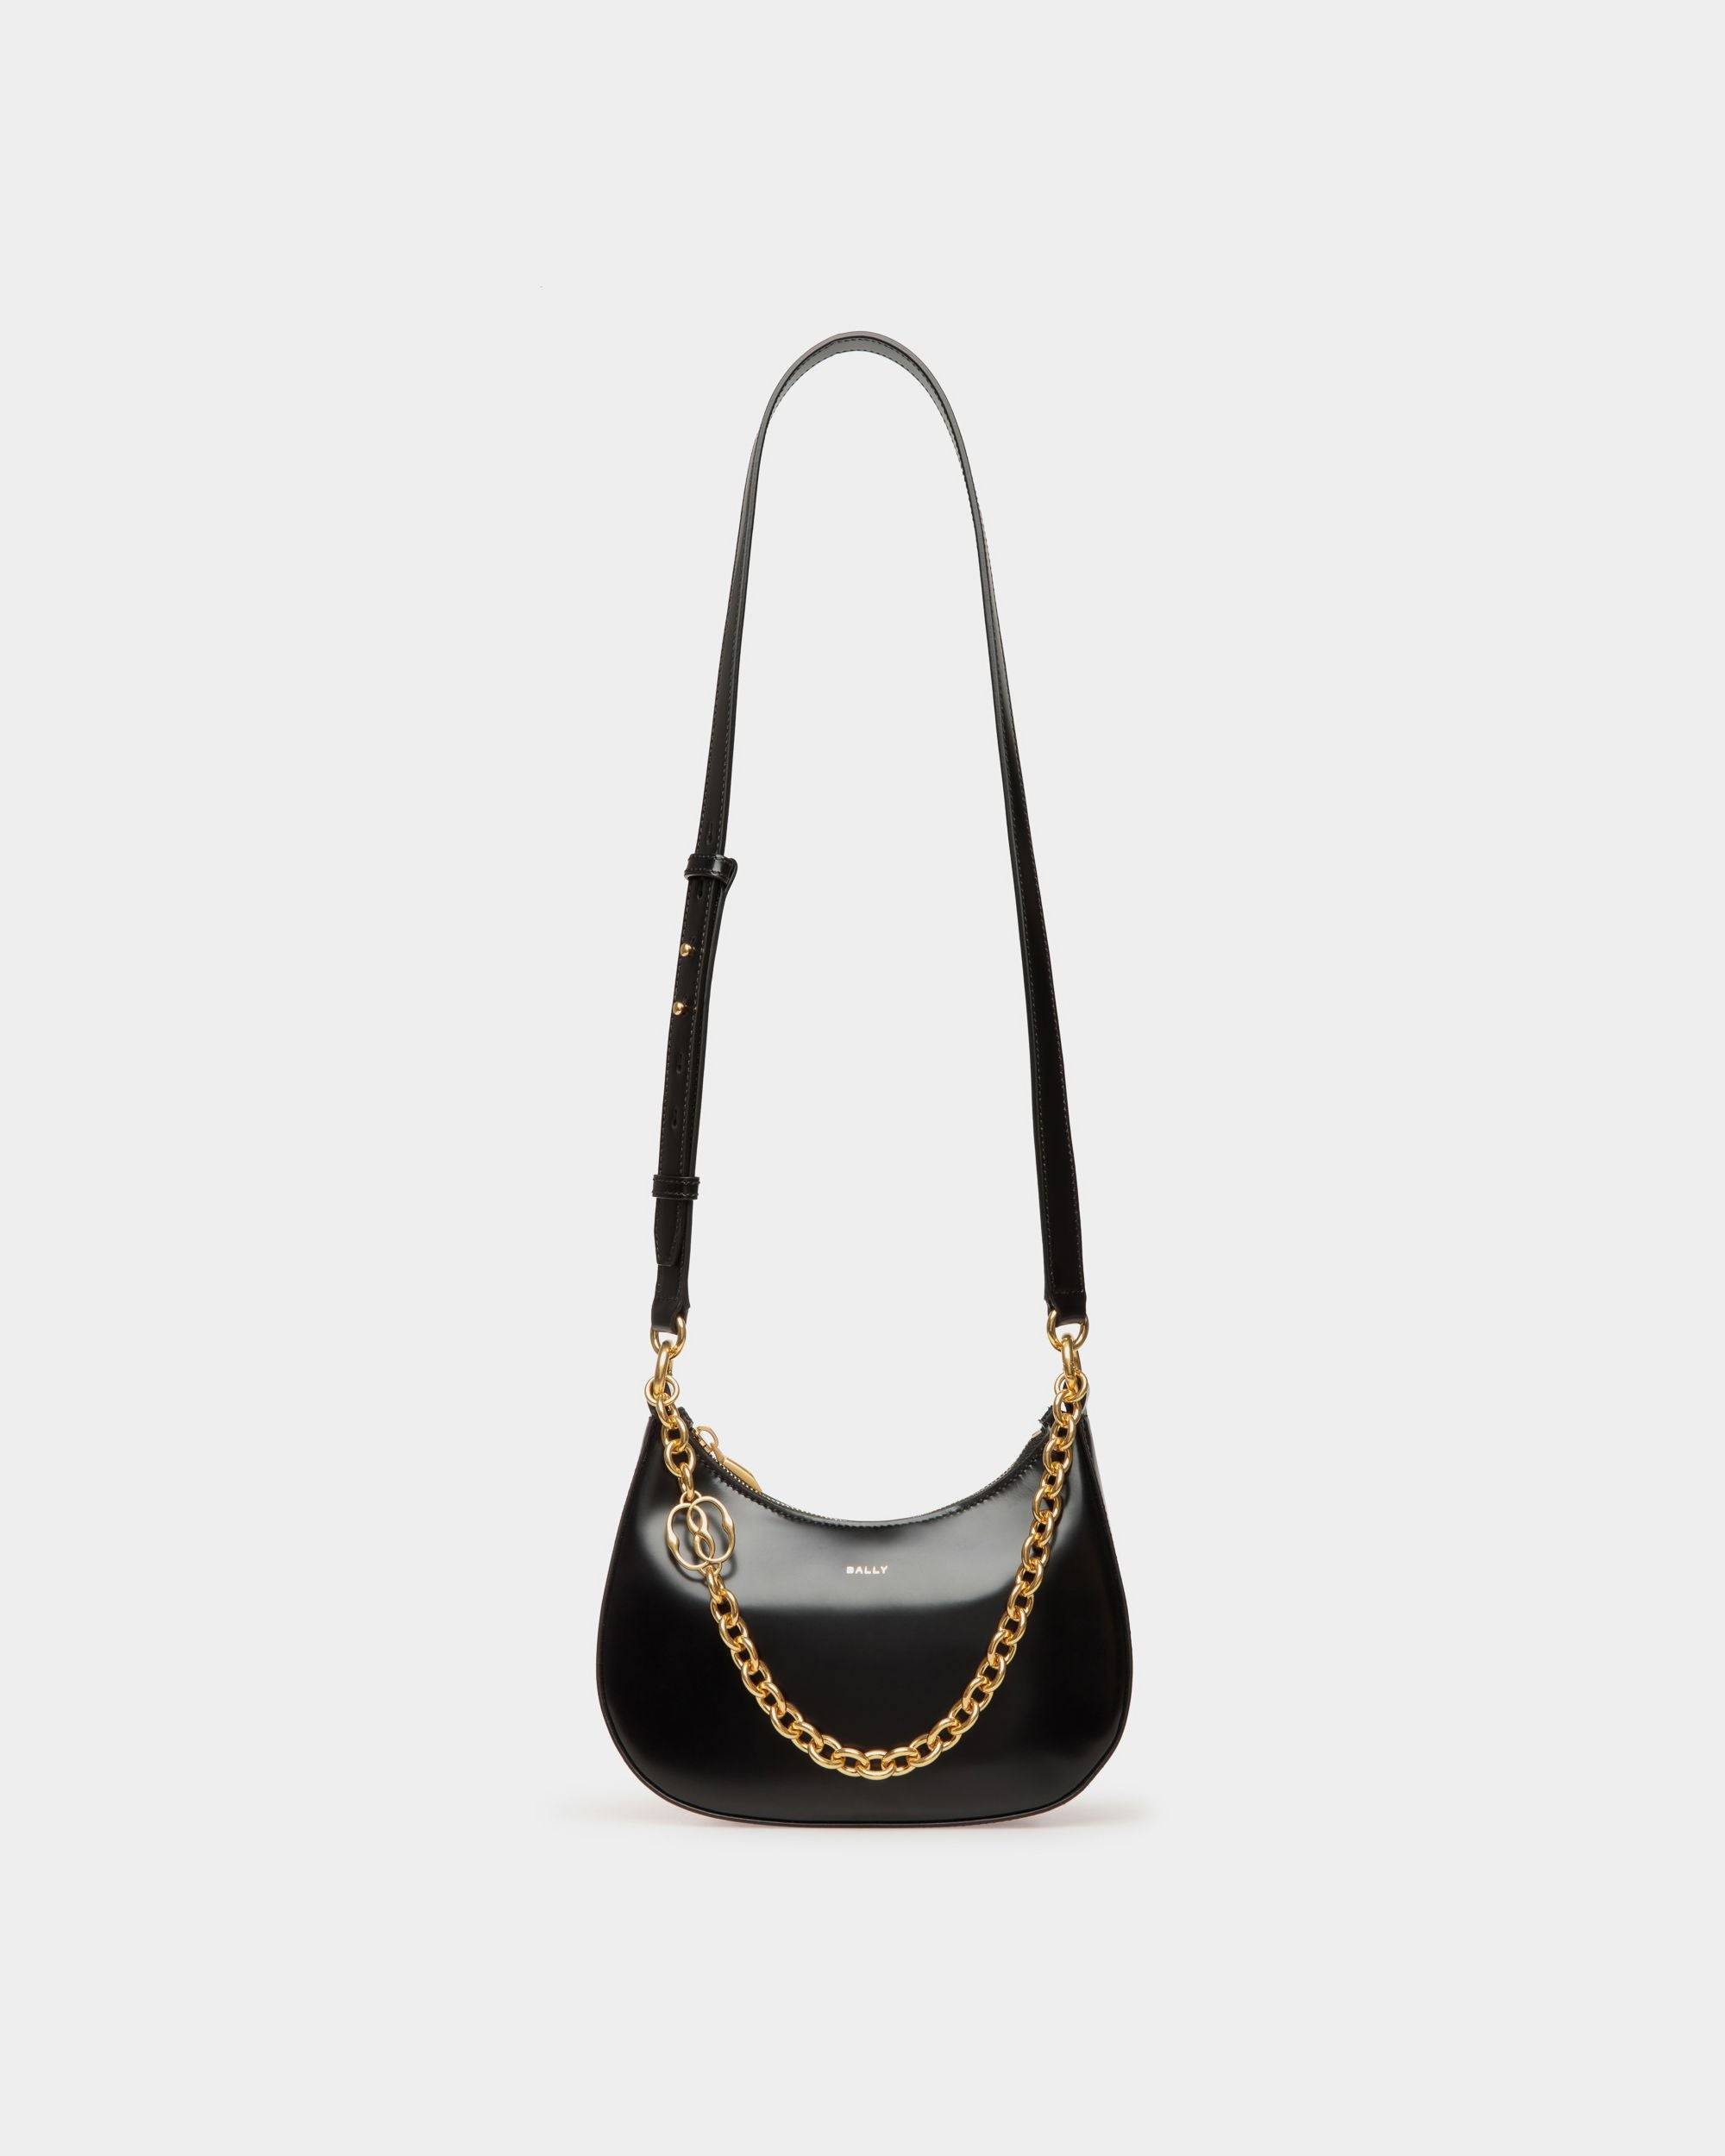 Emblem | Women's Mini Crossbody Bag in Black Brushed Leather | Bally | Still Life Front